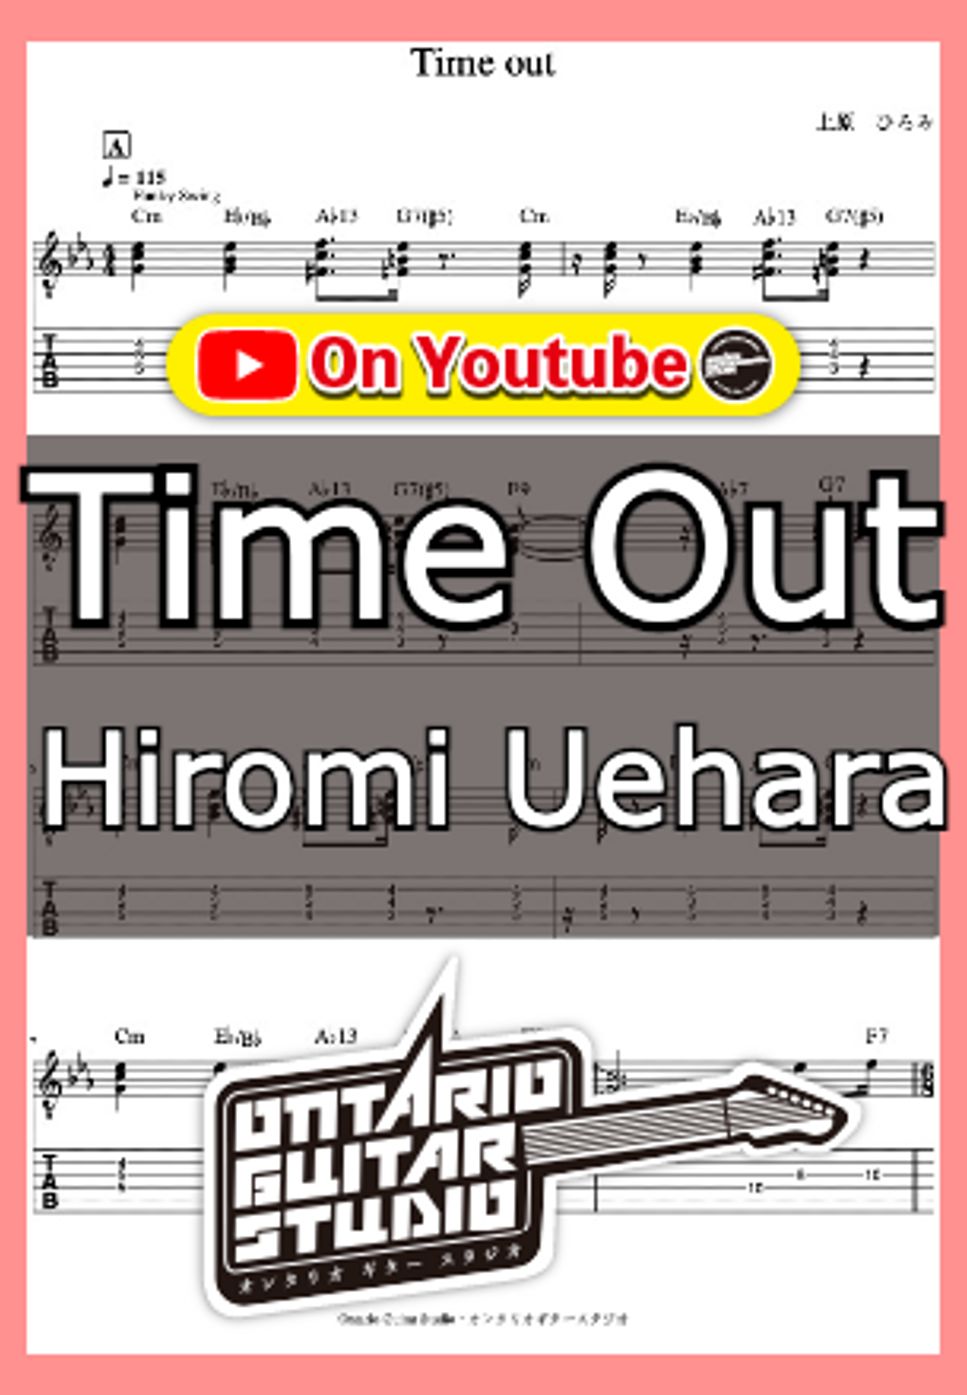 Hiromi Uehara - Time Out by Ontario Guitar Studio